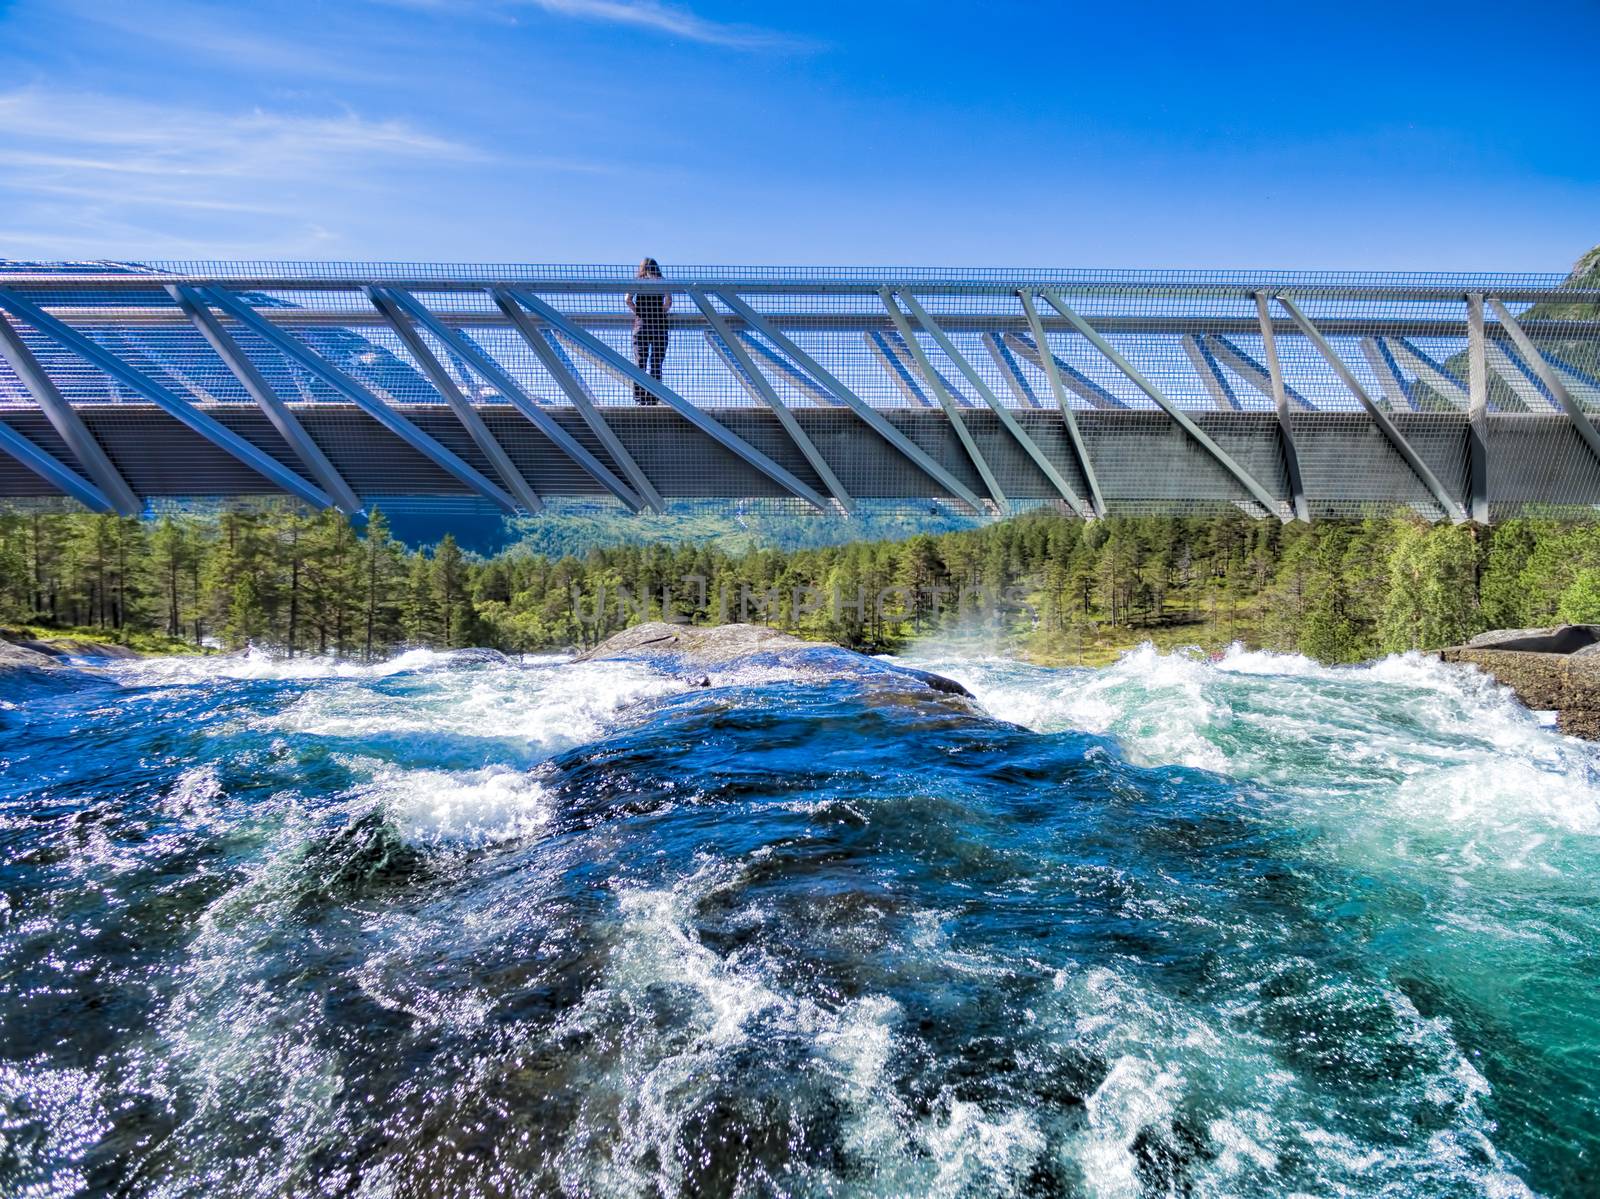 Girl on bridge in Norway by Harvepino